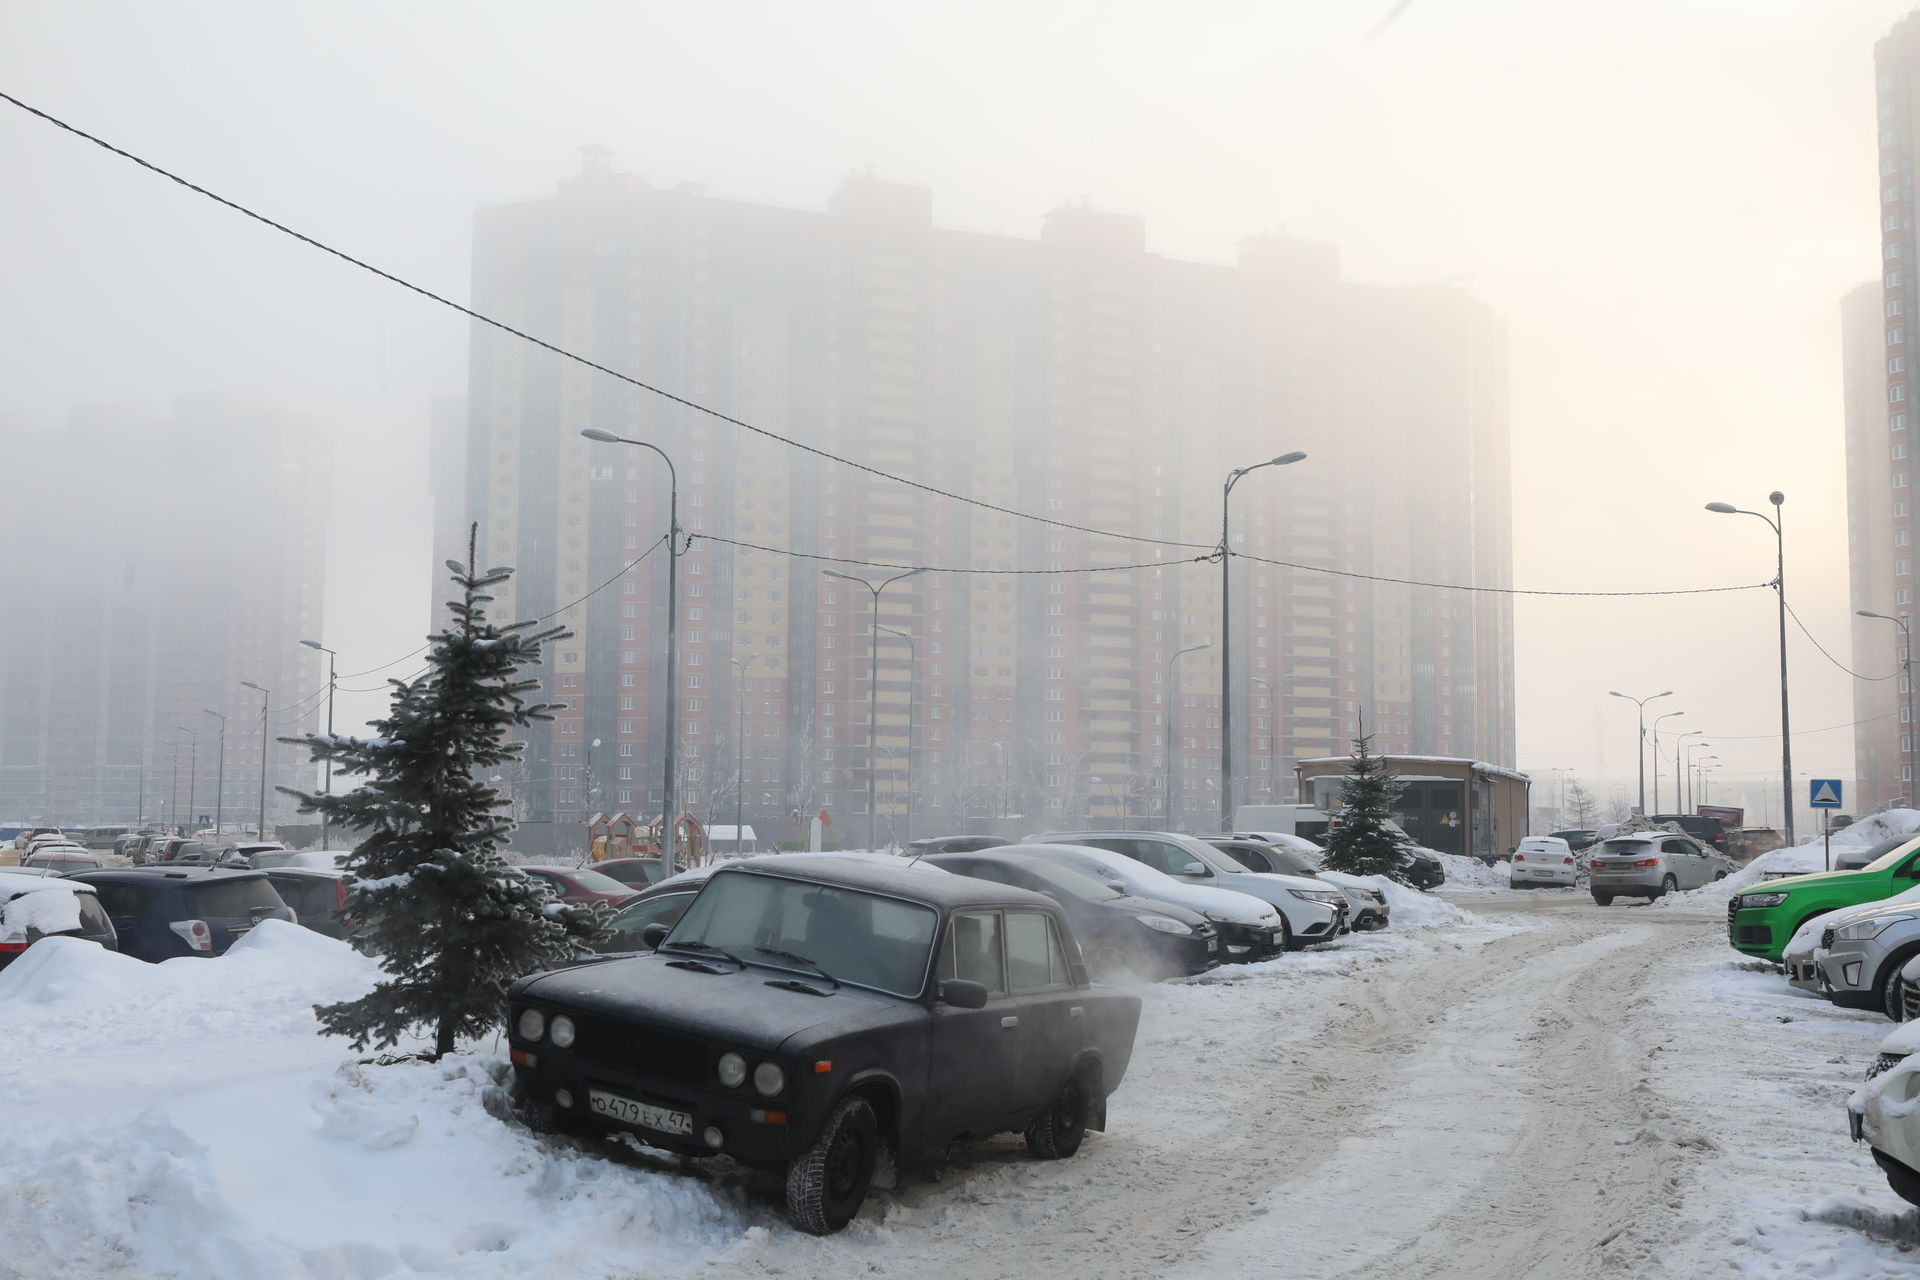 18 января 2023 г. Туман зимой в городе. Зимний туман в городе. Туманная зима город. Туман зима город.